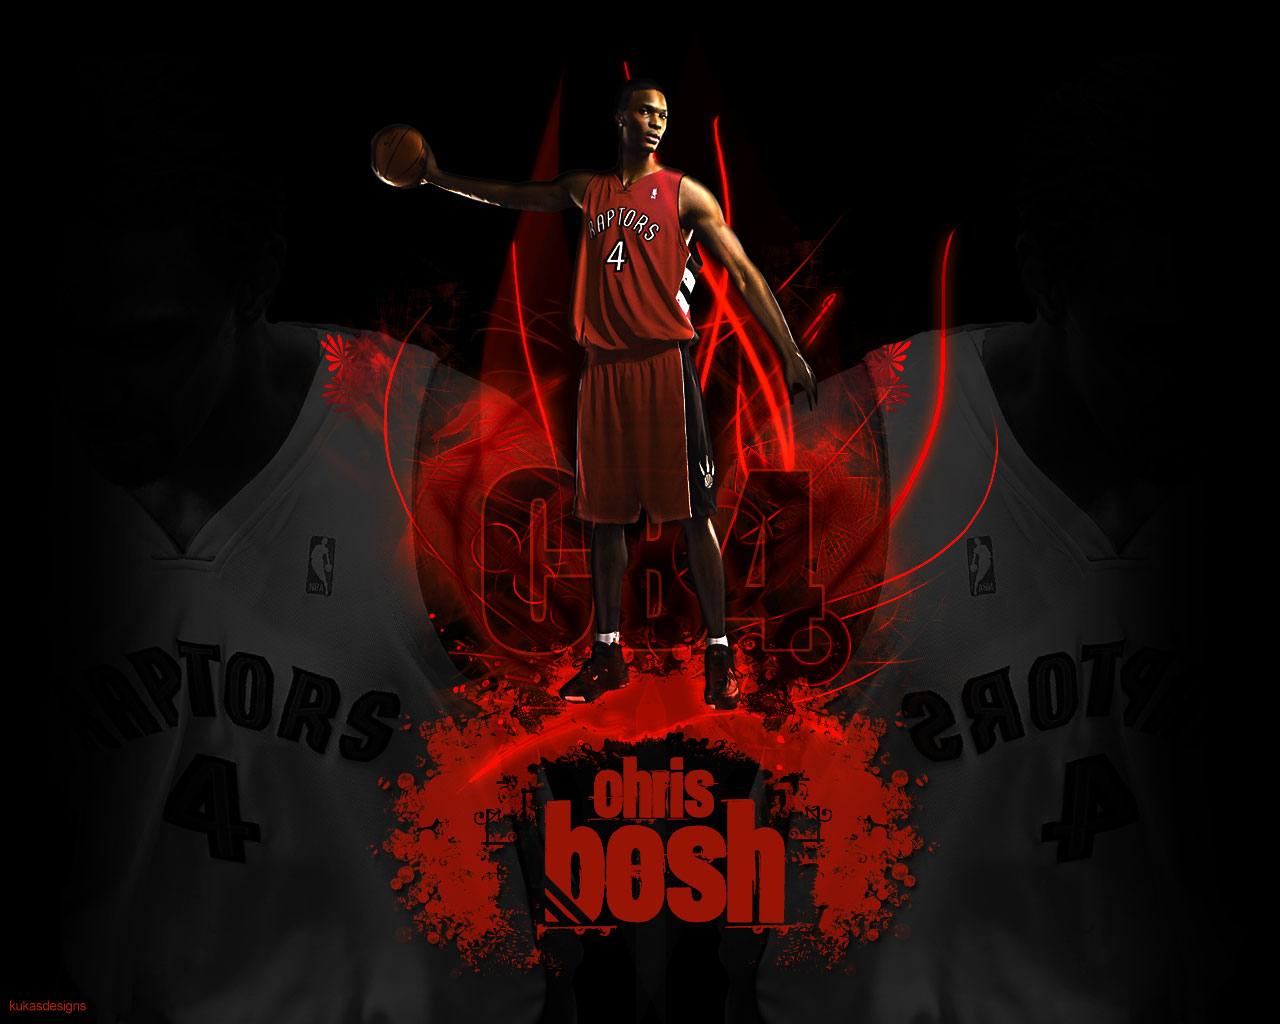 Chris Bosh Basketball Wallpaper For Android